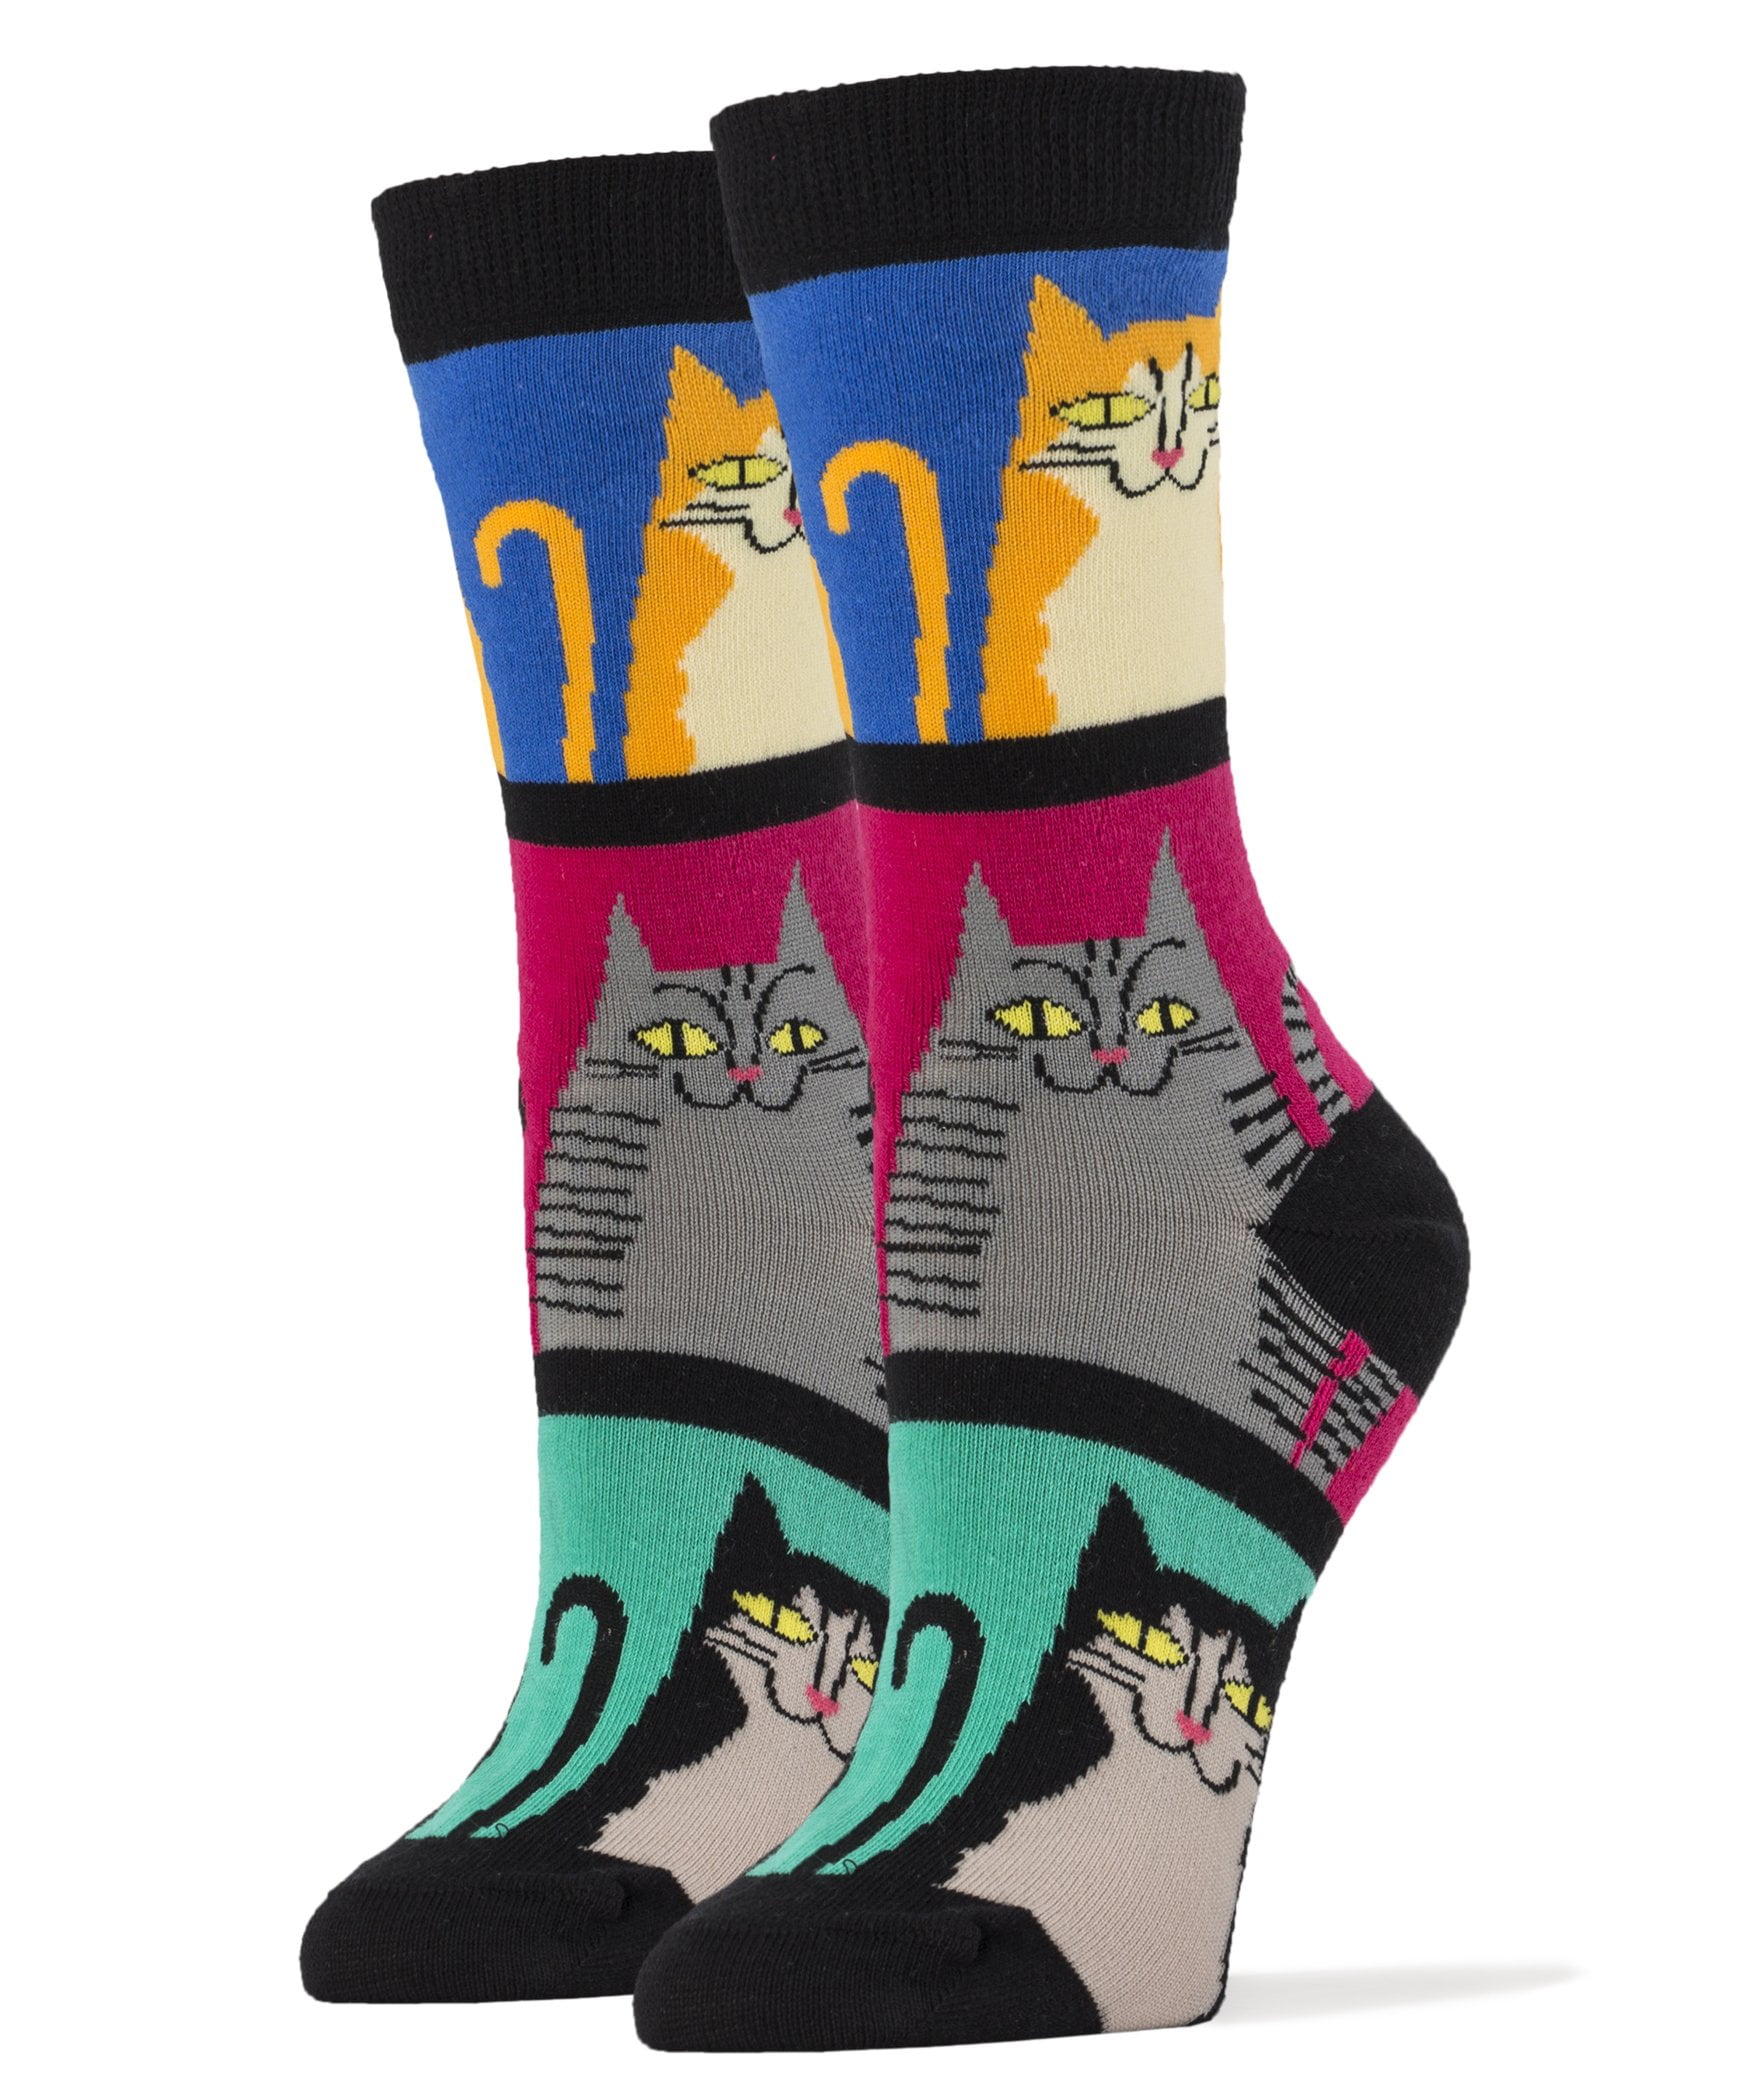 Happypop Socks - Awesome Funky Novelty Socks Online Store